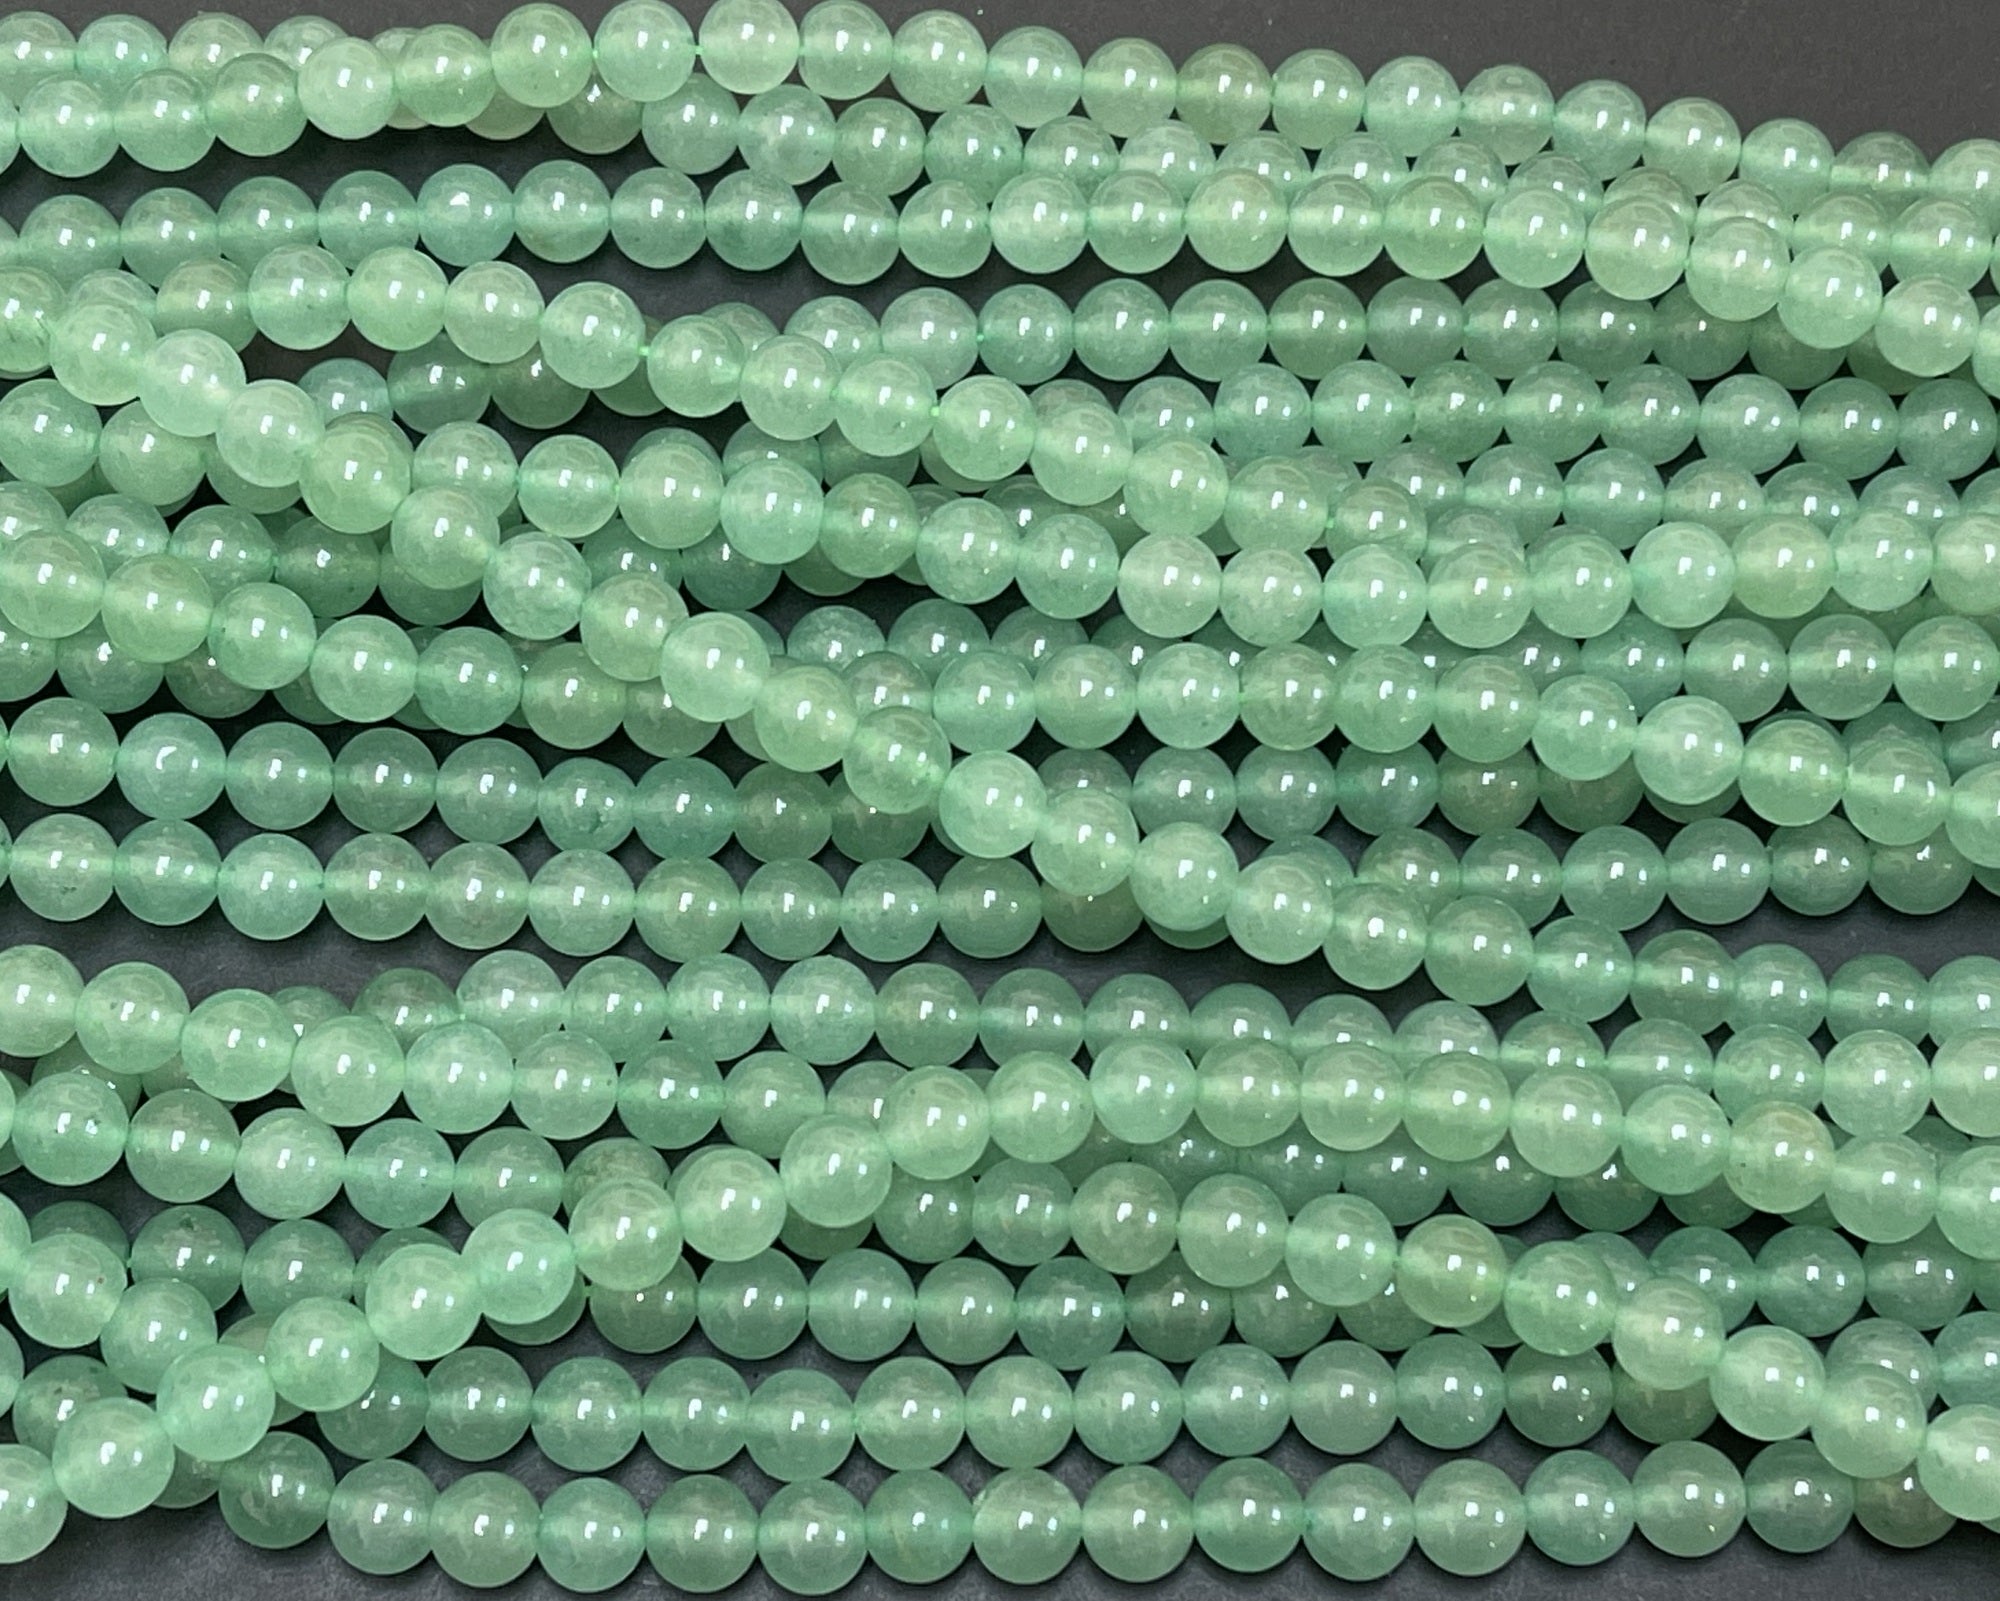 Green Aventurine 6mm round natural gemstone beads 15" strand